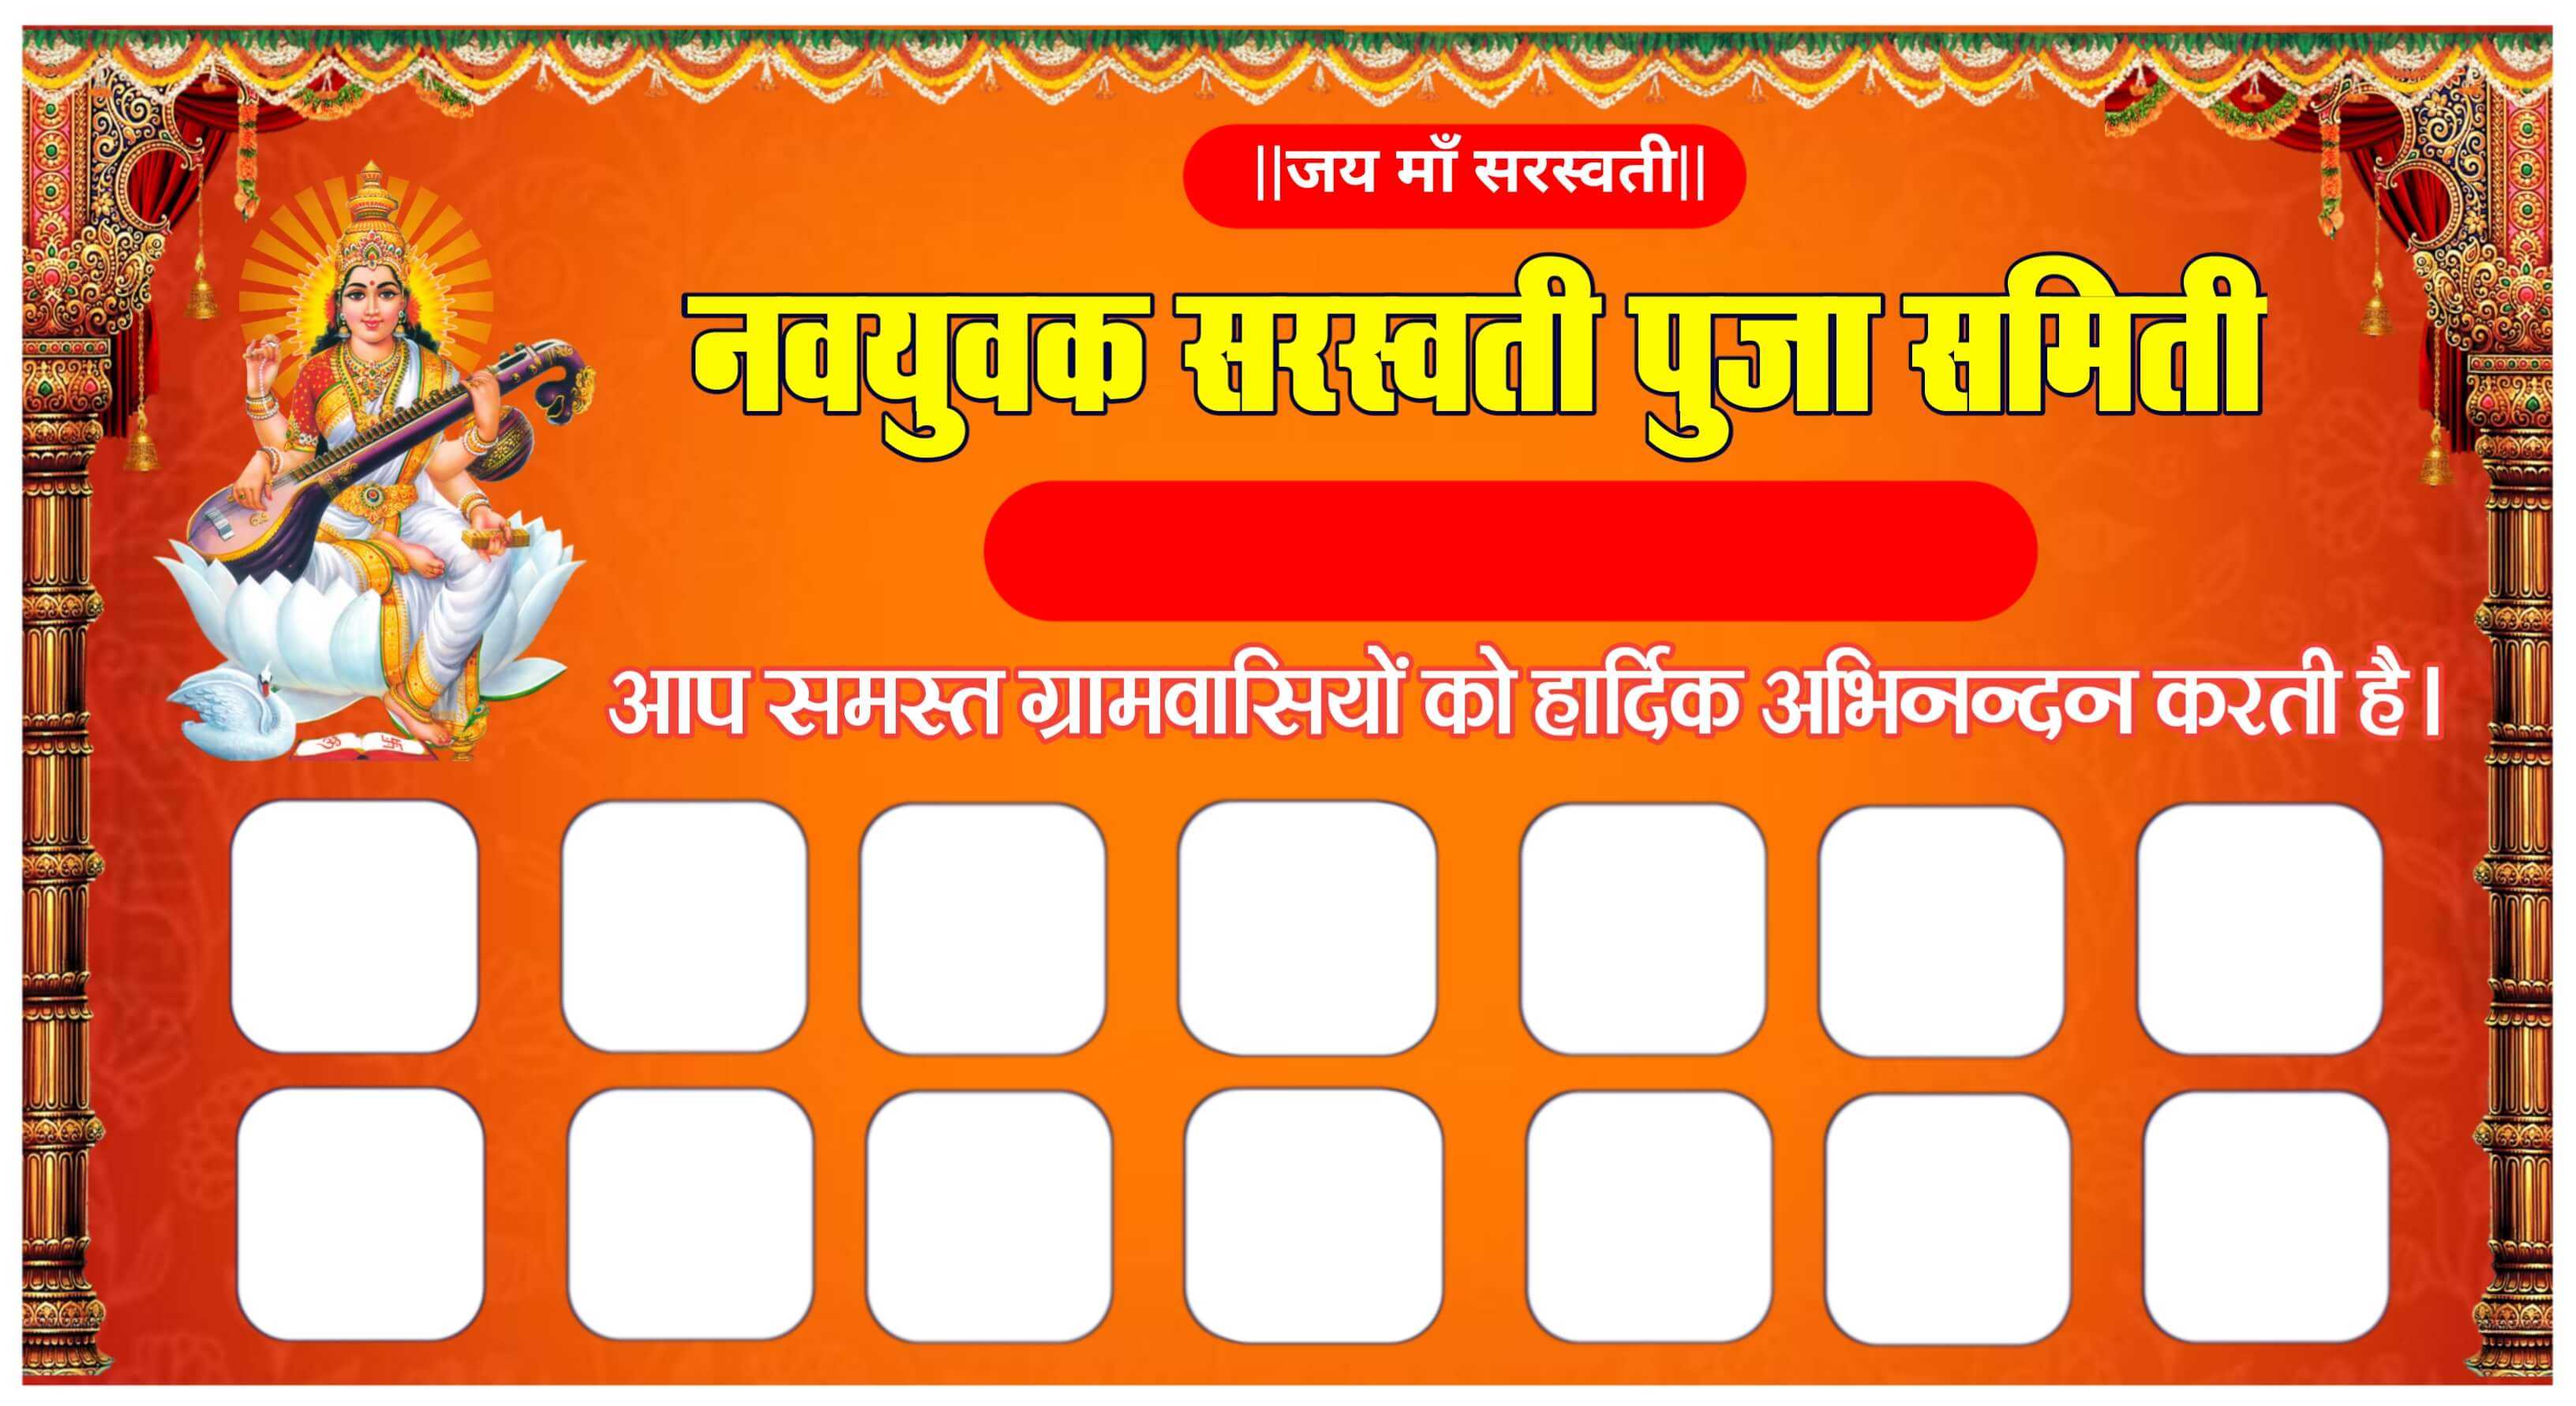 Saraswati Puja ka banner plp file download| Saraswati Puja banner editing in mobile| Saraswati Puja ka poster Kaise banaen mobile se